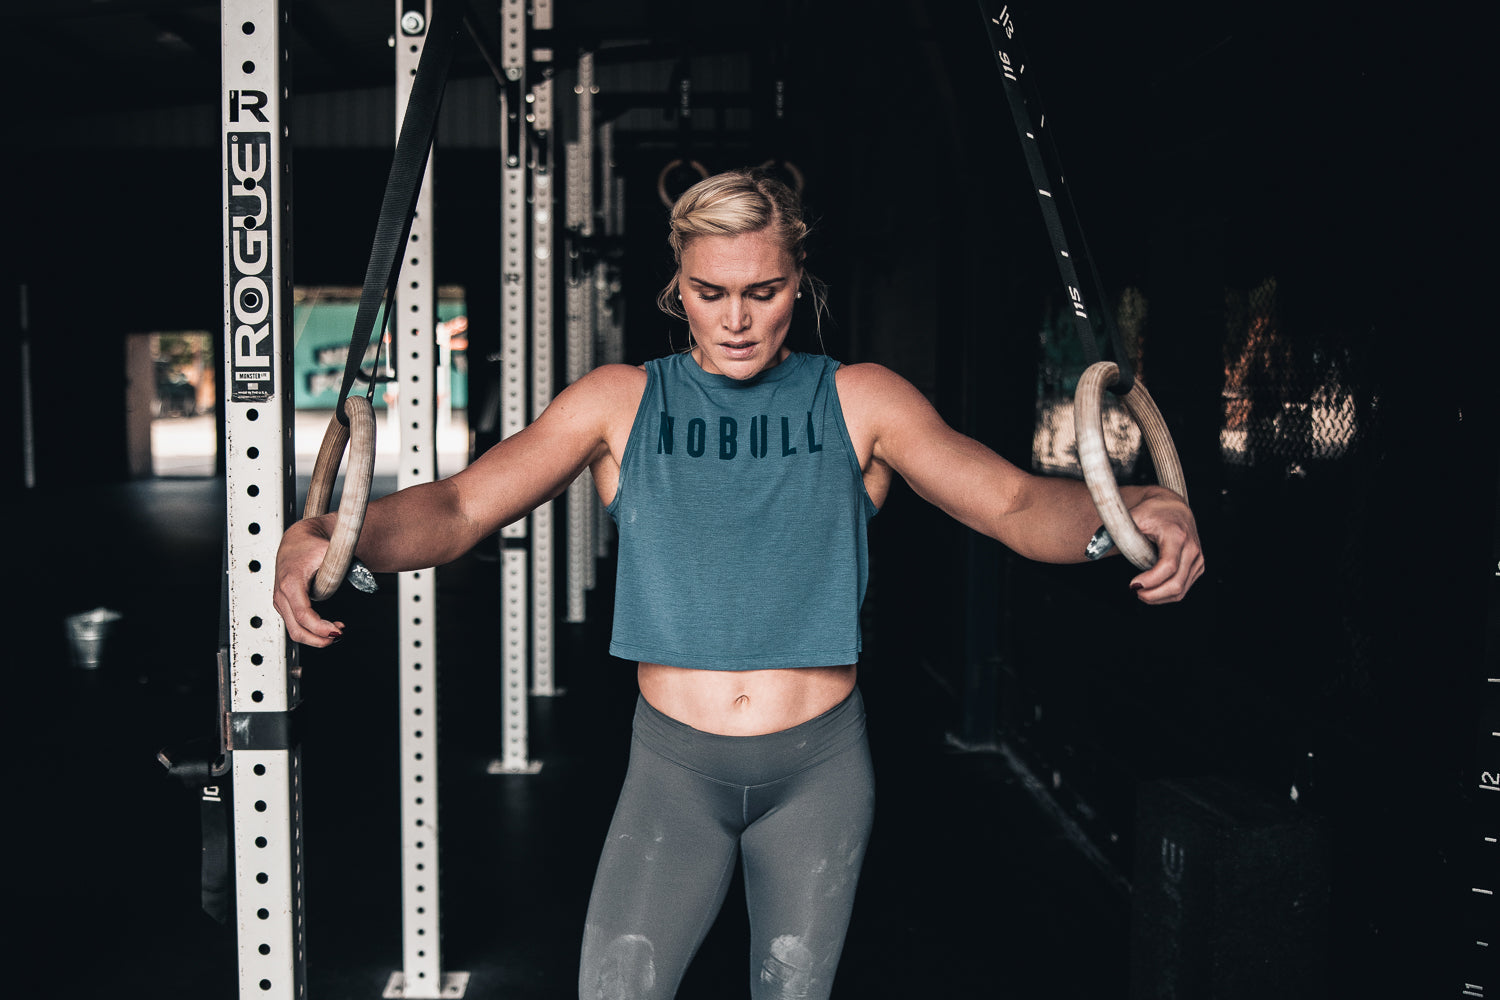 CrossFit athlete Katrin Davíðsdóttir is wearing athletic clothing while resting between sets of her workout